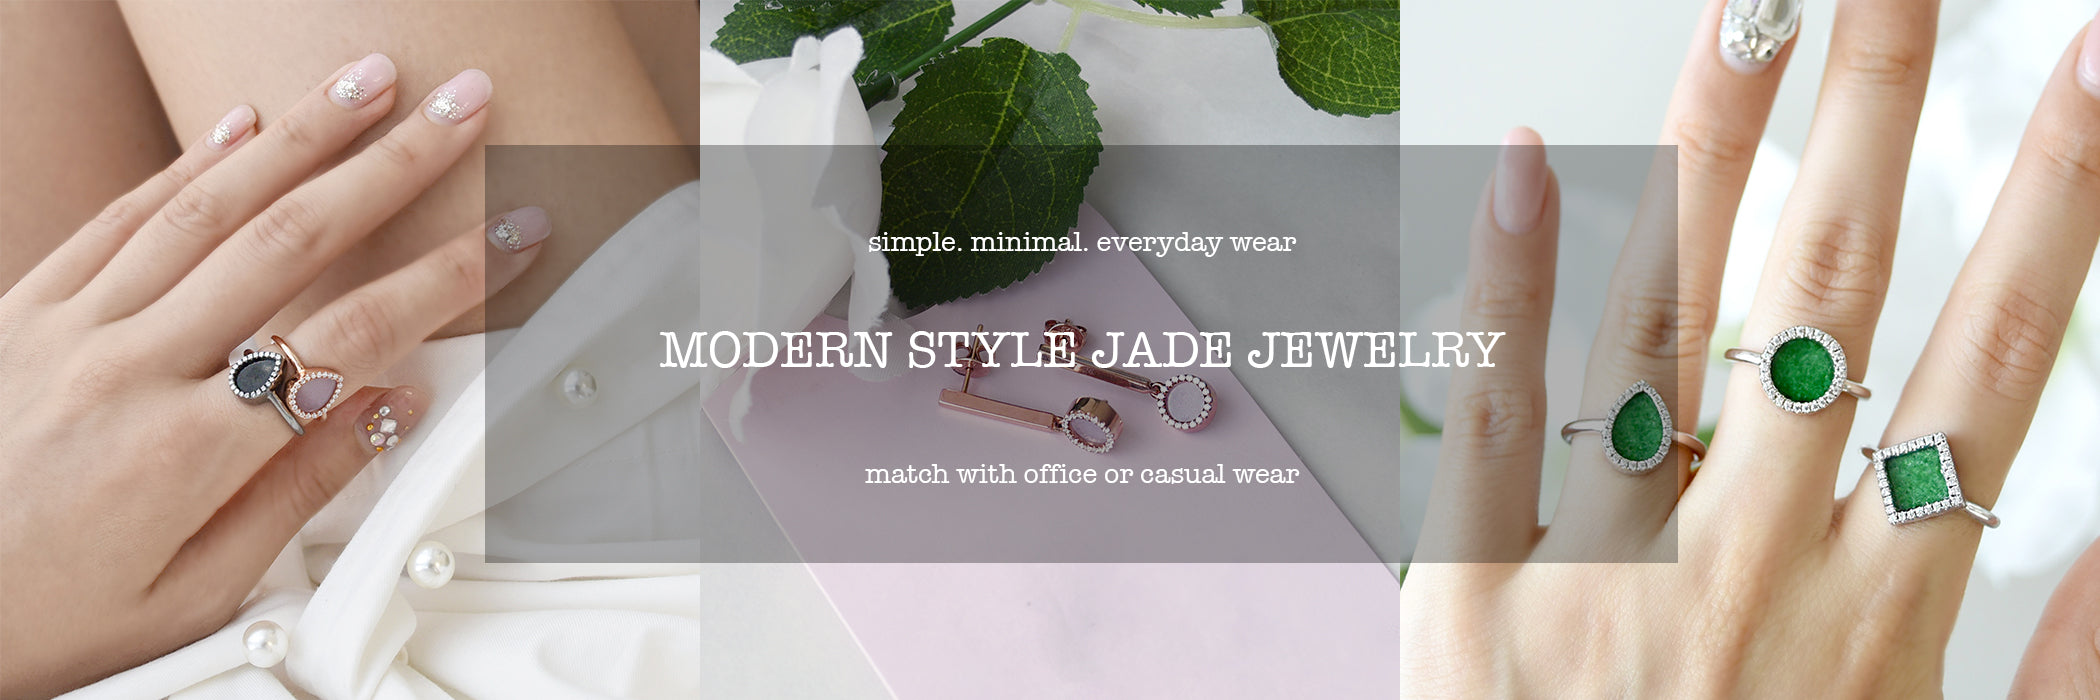 Modern style jade jewelry